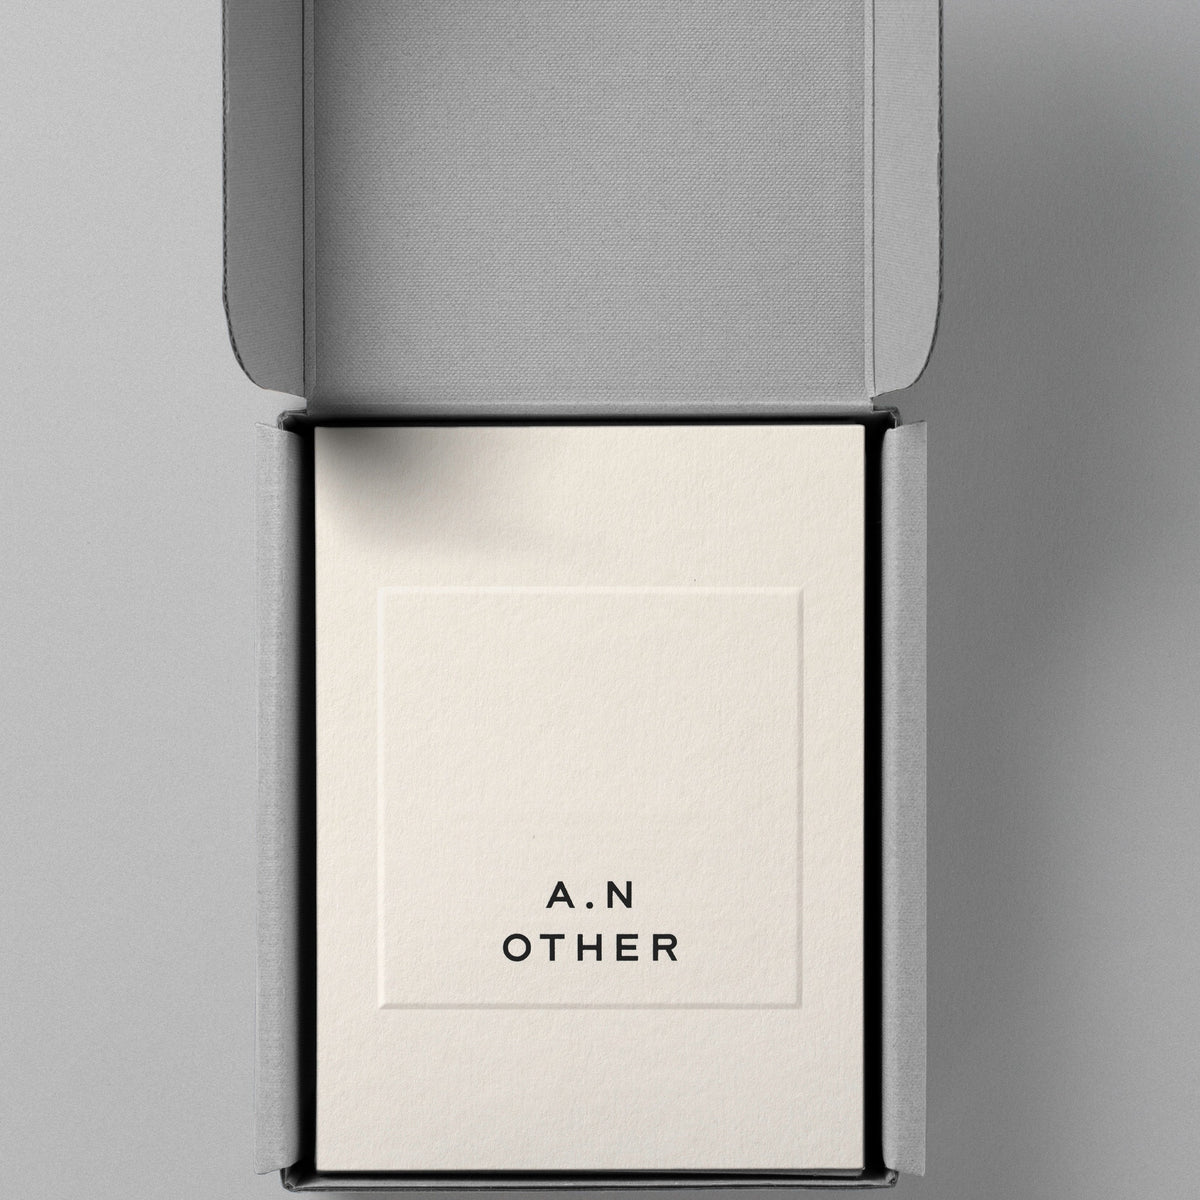 A.N Other Parfum - FR2018